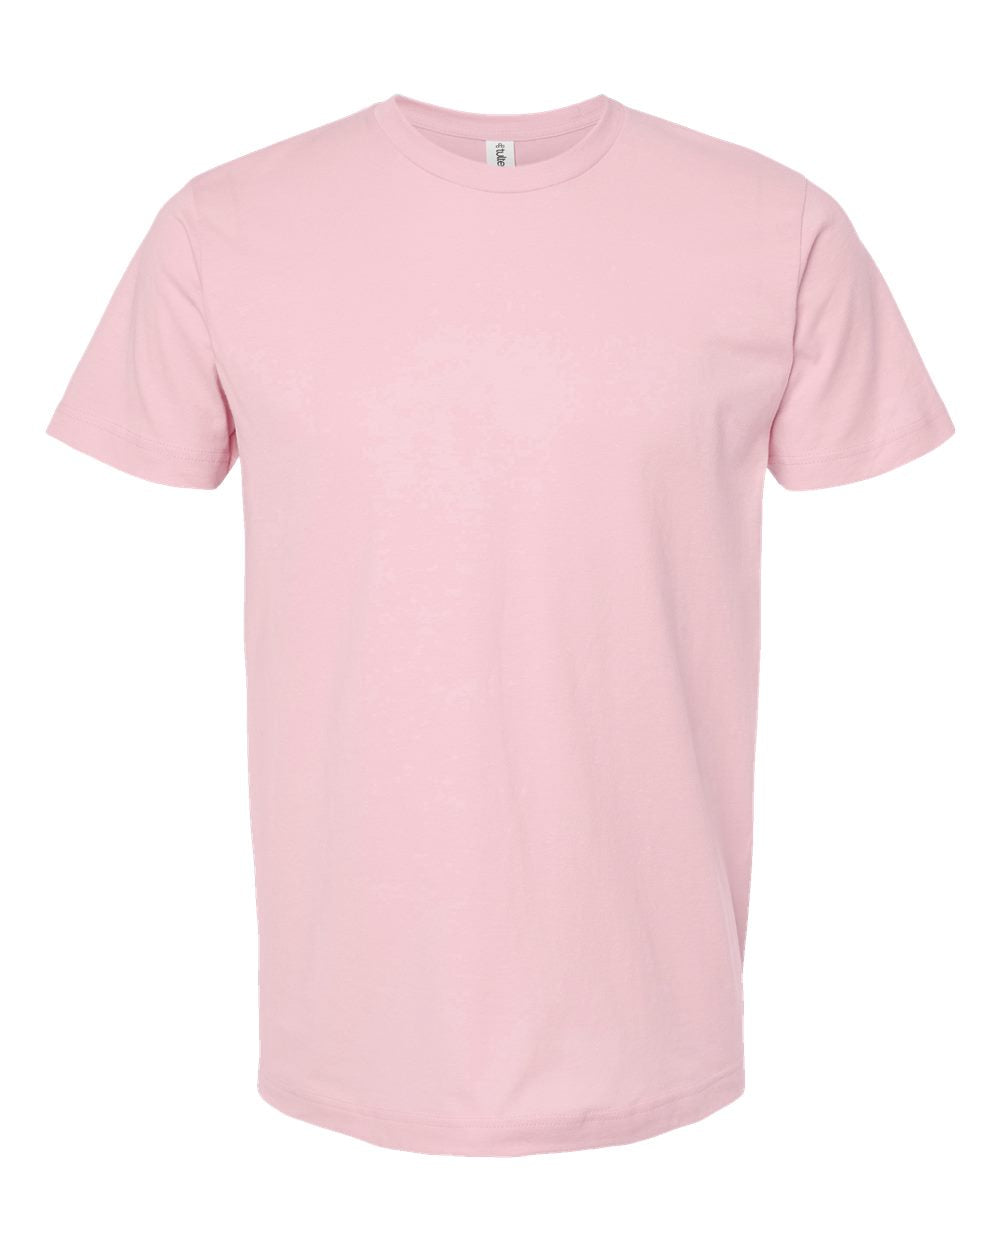 Pretreated Tultex 202 Unisex Fine Jersey T-Shirt - Pink